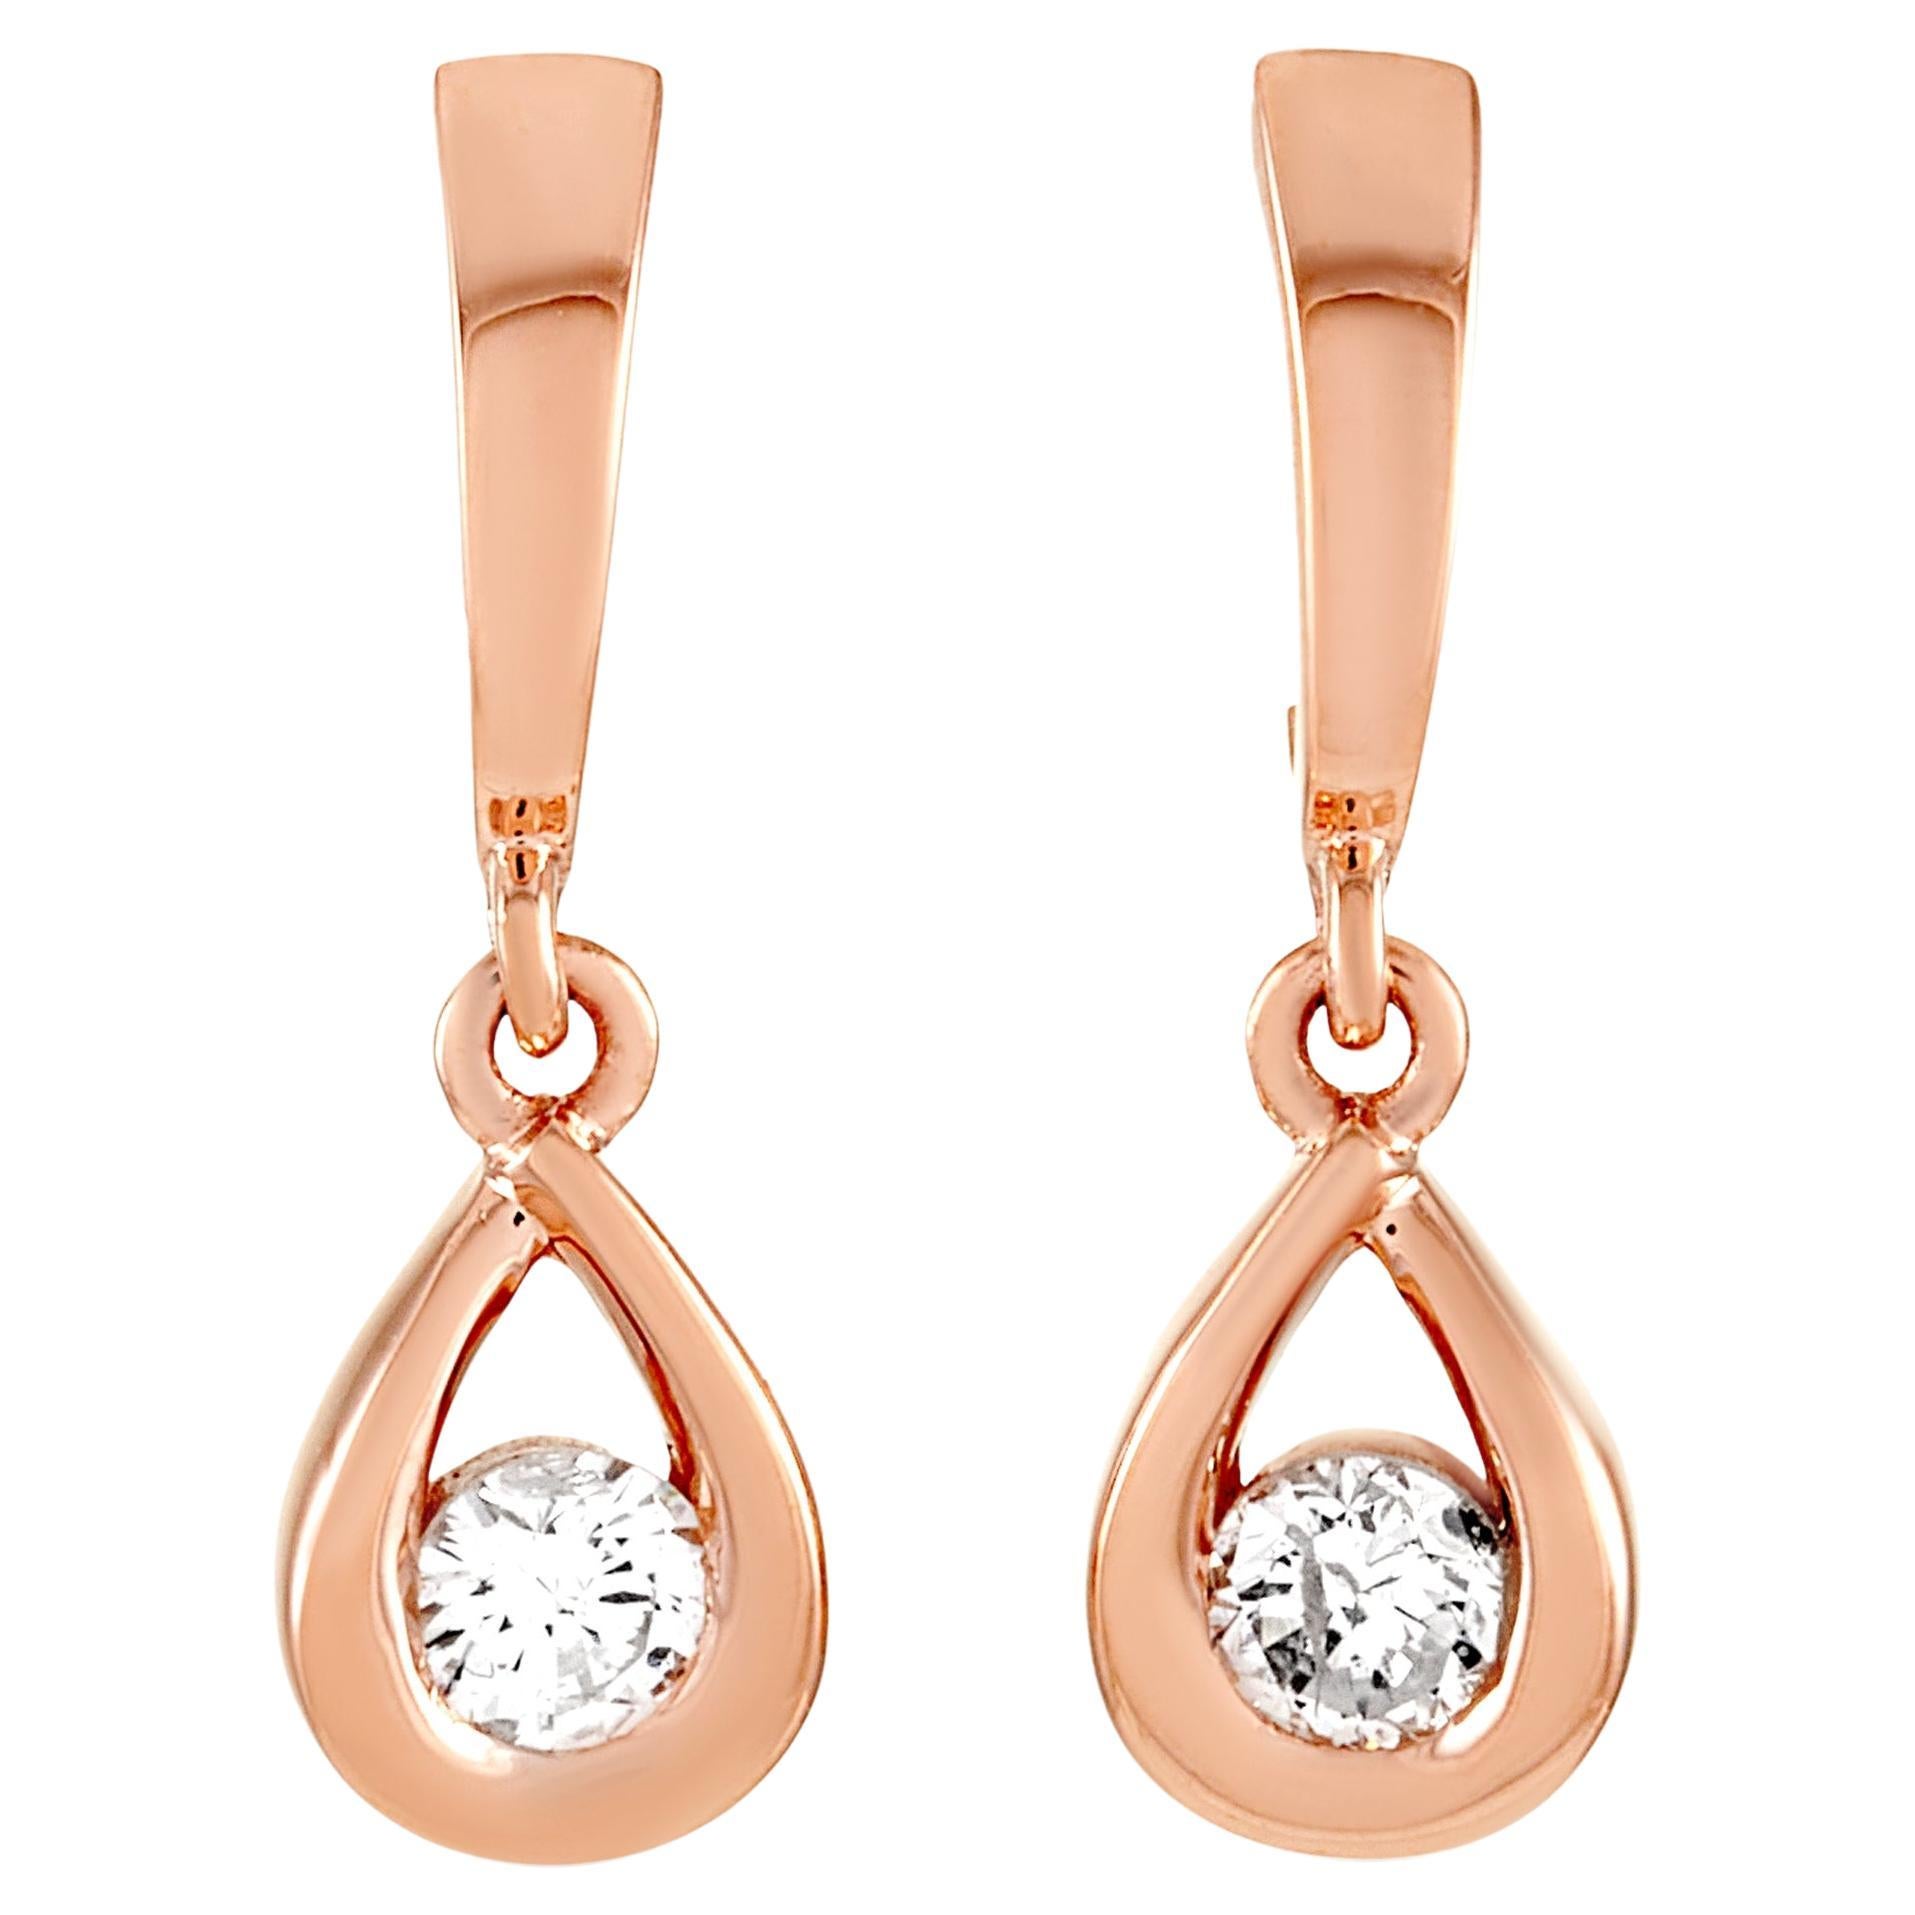 LB Exclusive 14k Rose Gold 0.20 Carat Diamond Earrings